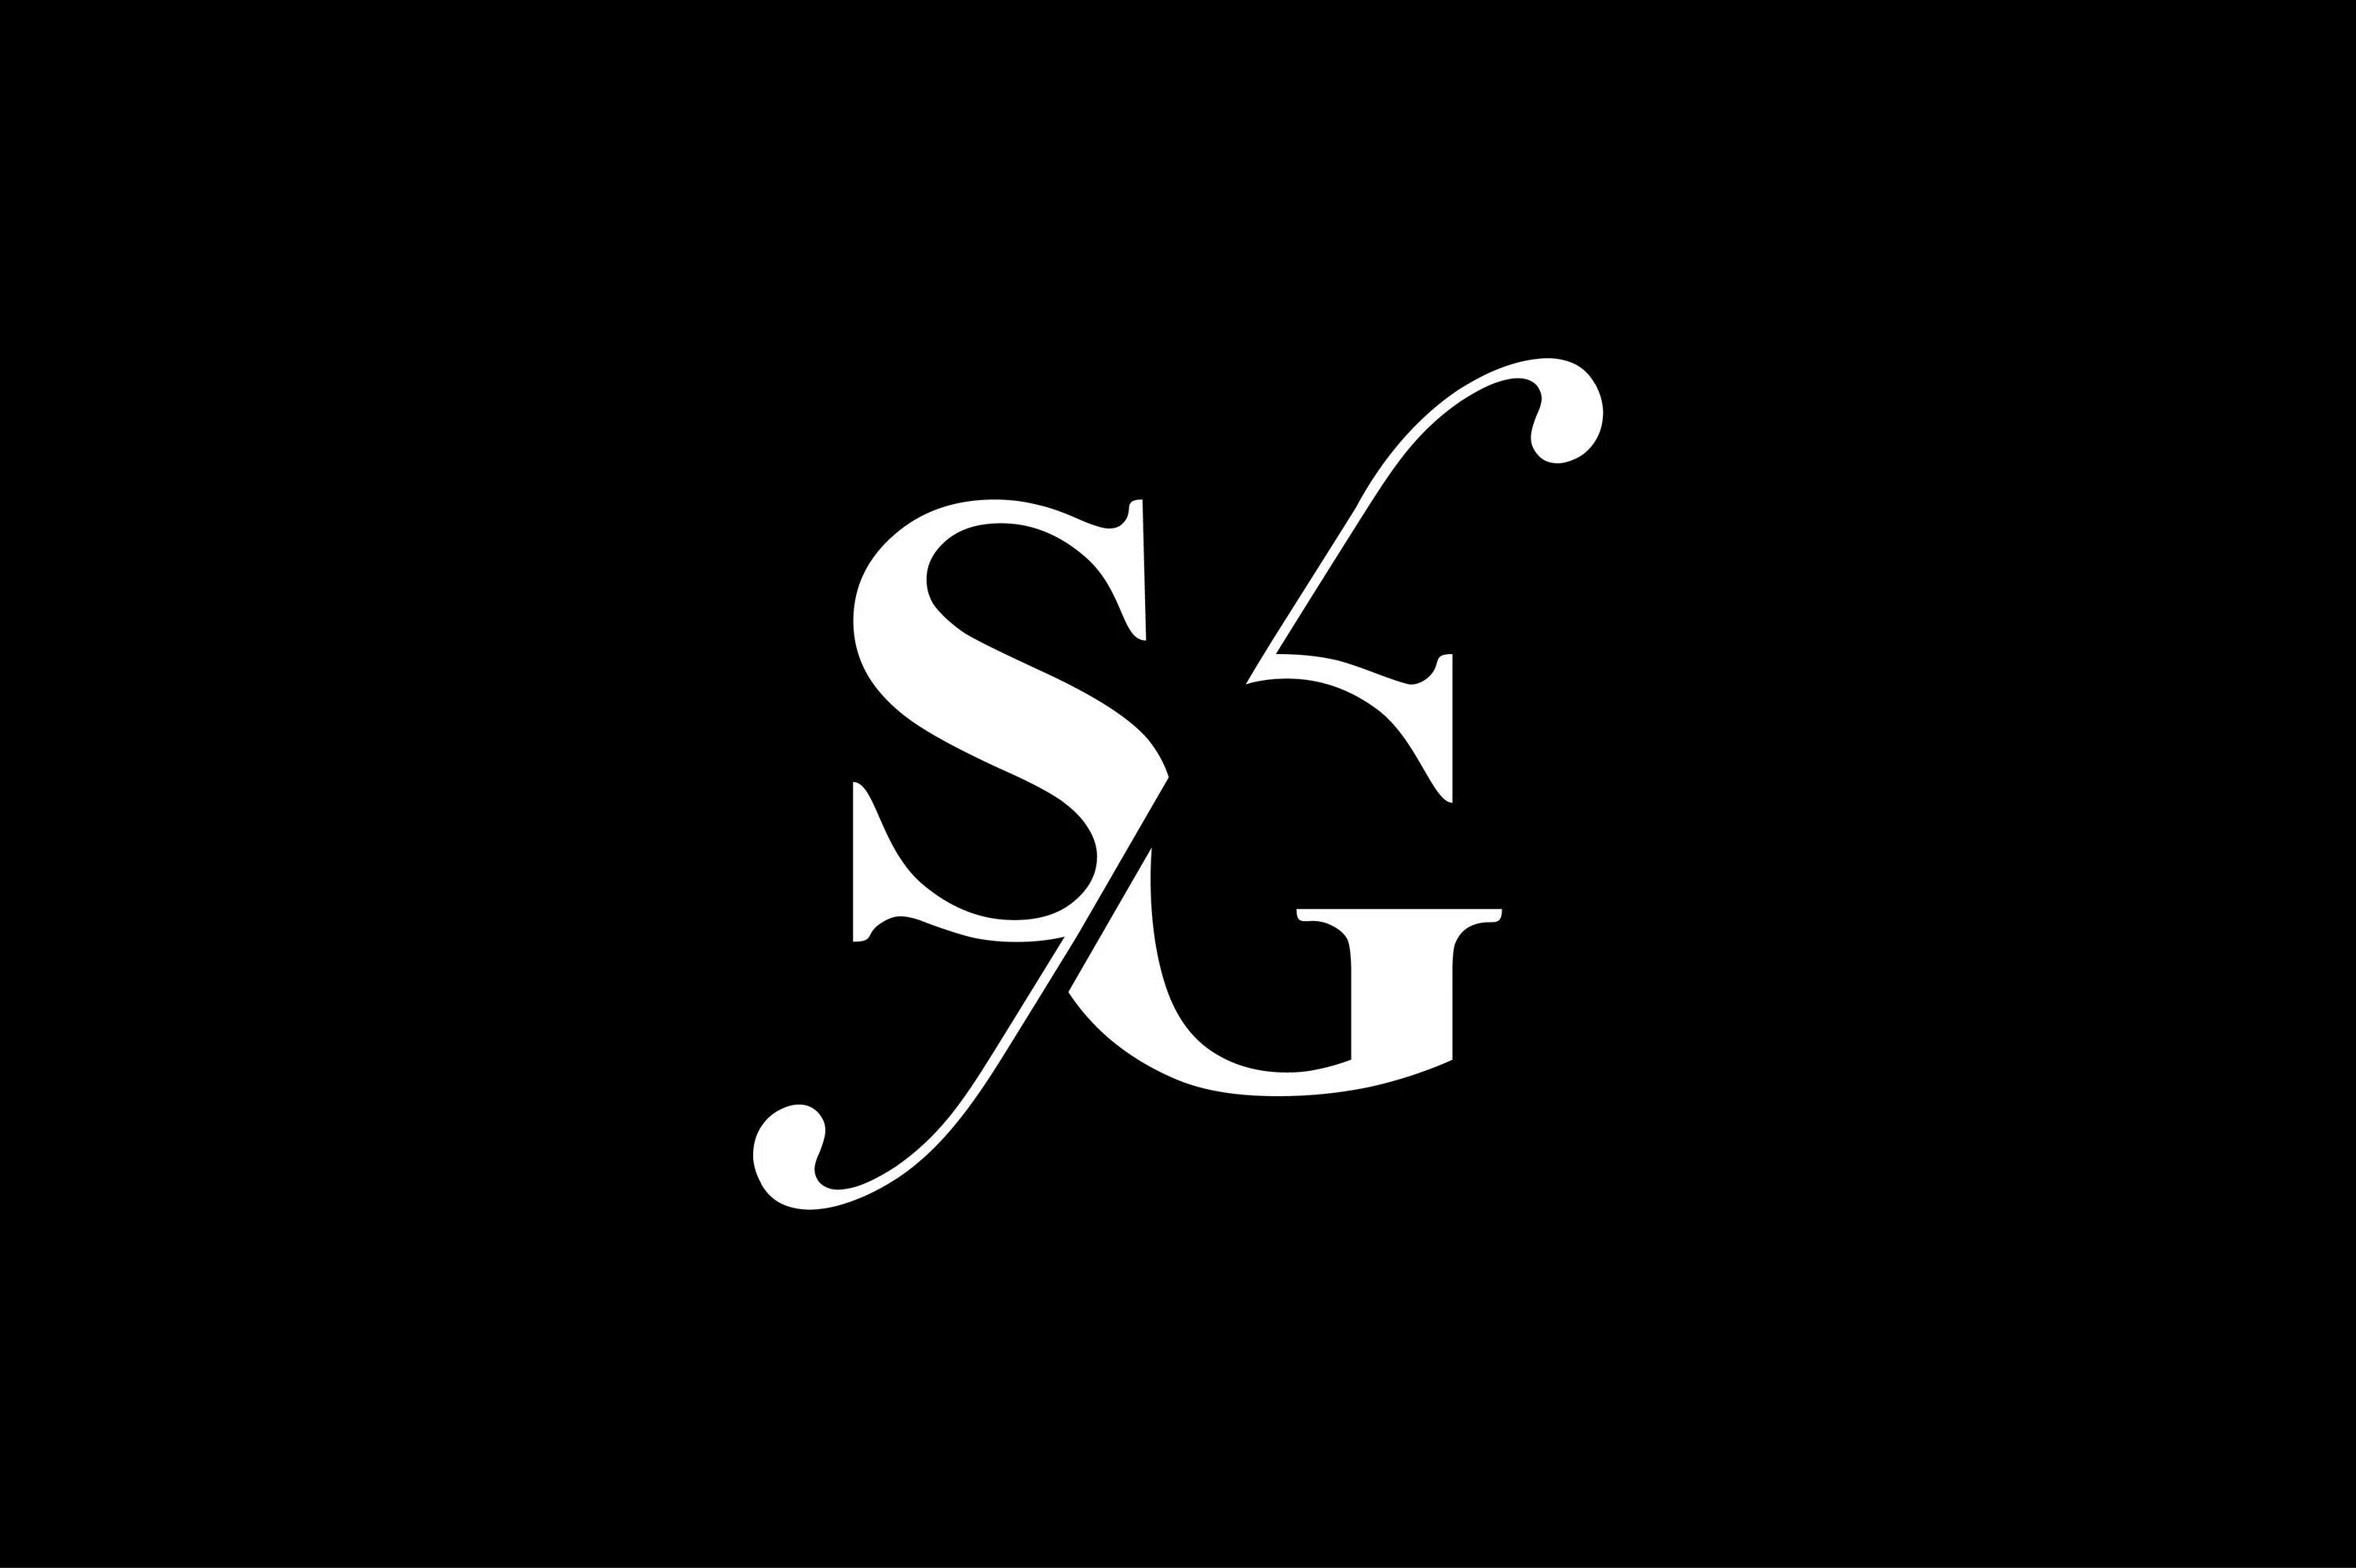 SG логотип. Картинки SG. Лого с буквами SG. Монограмма g s.